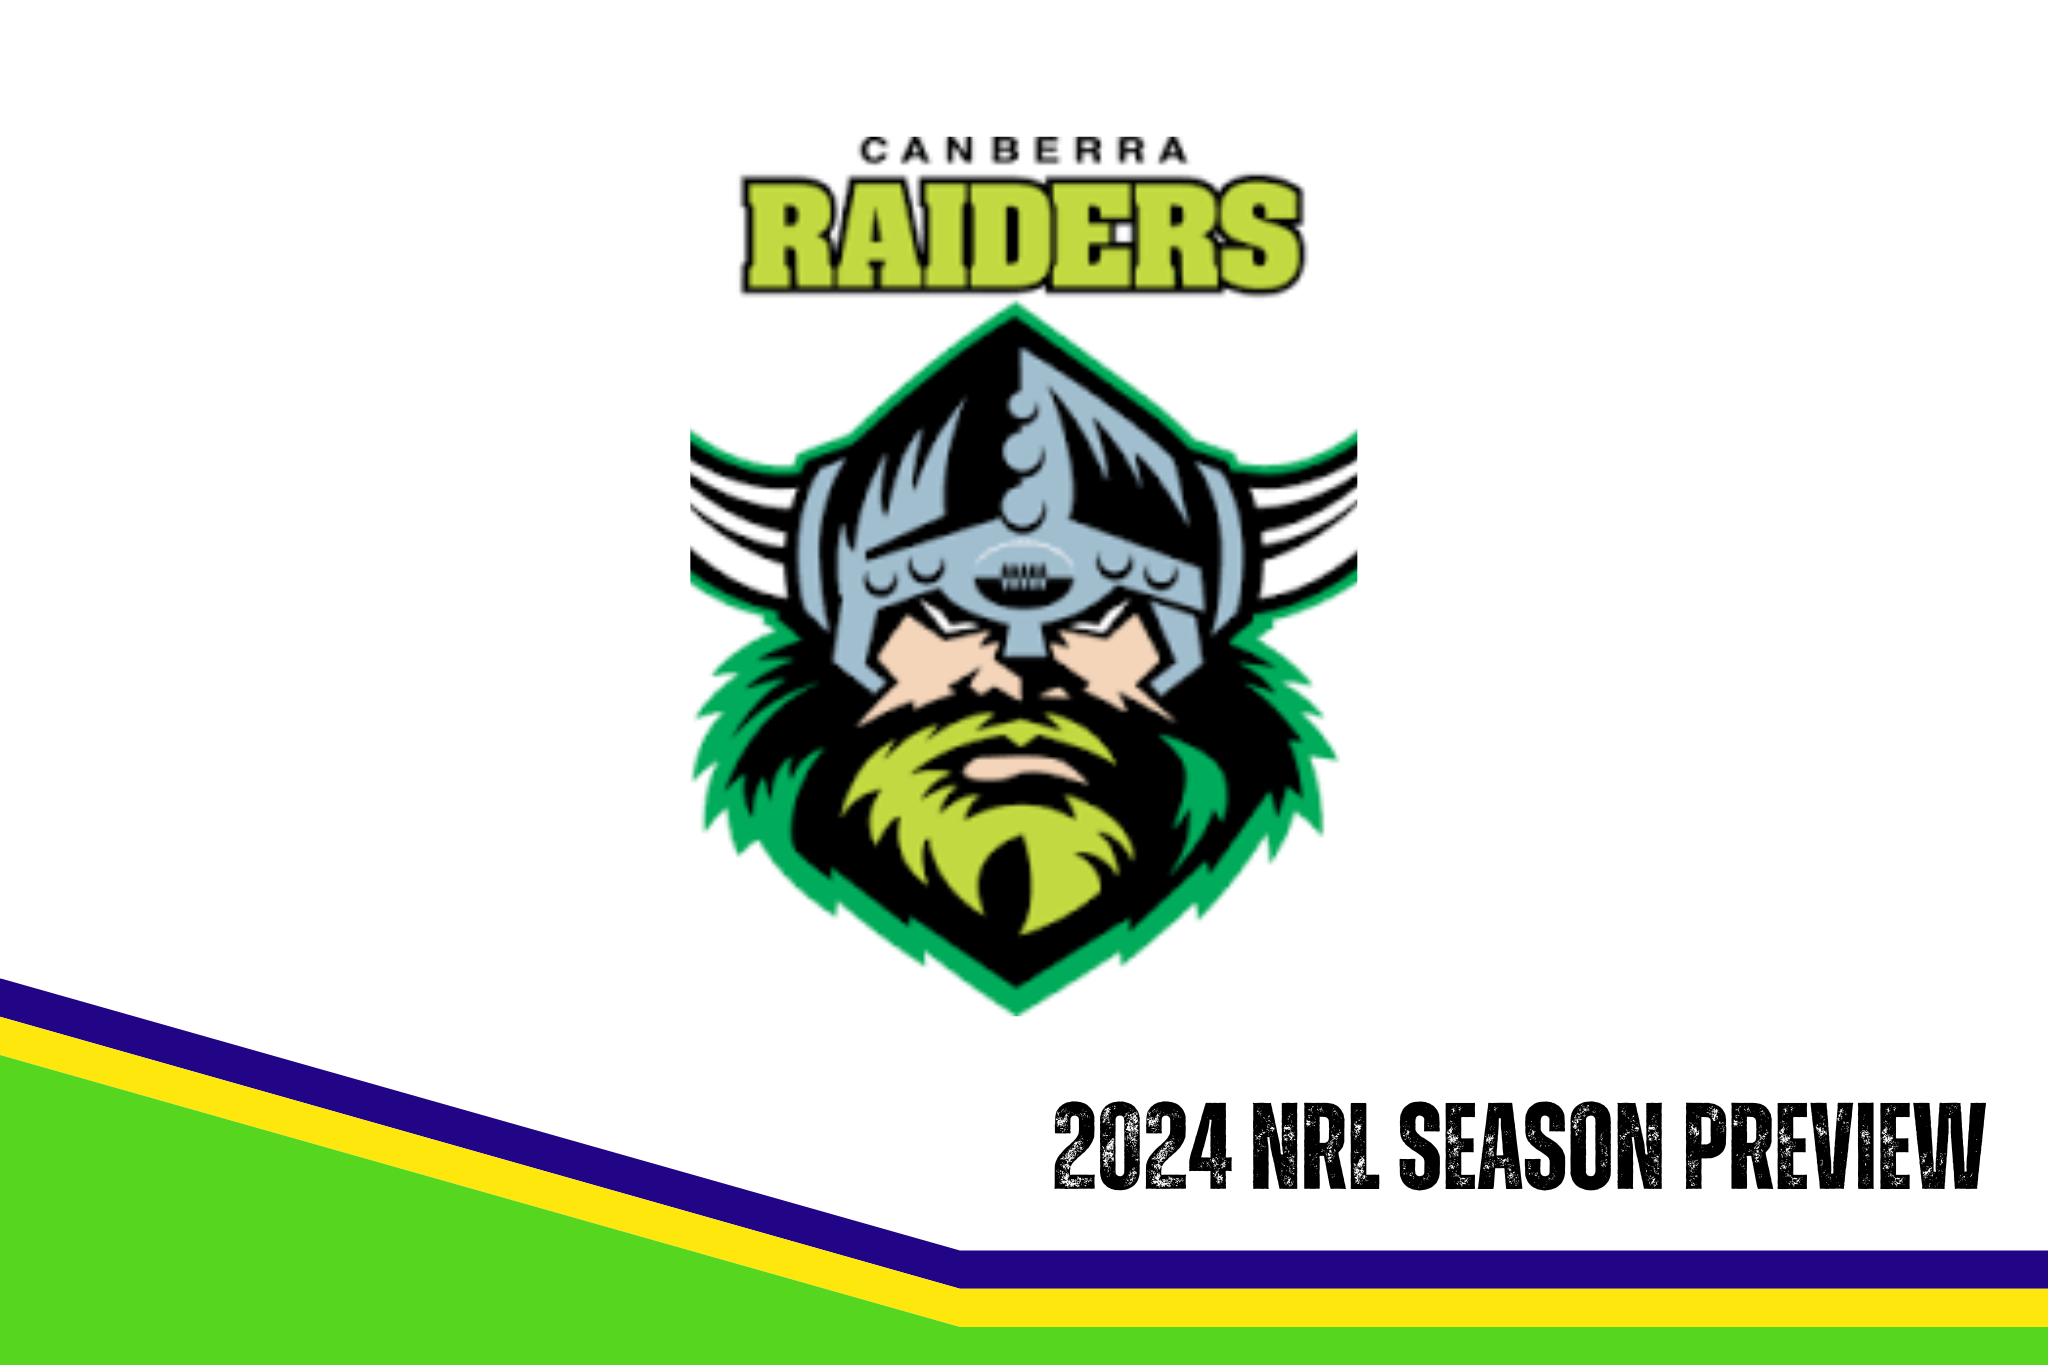 Canberra Raiders 2024 season preview